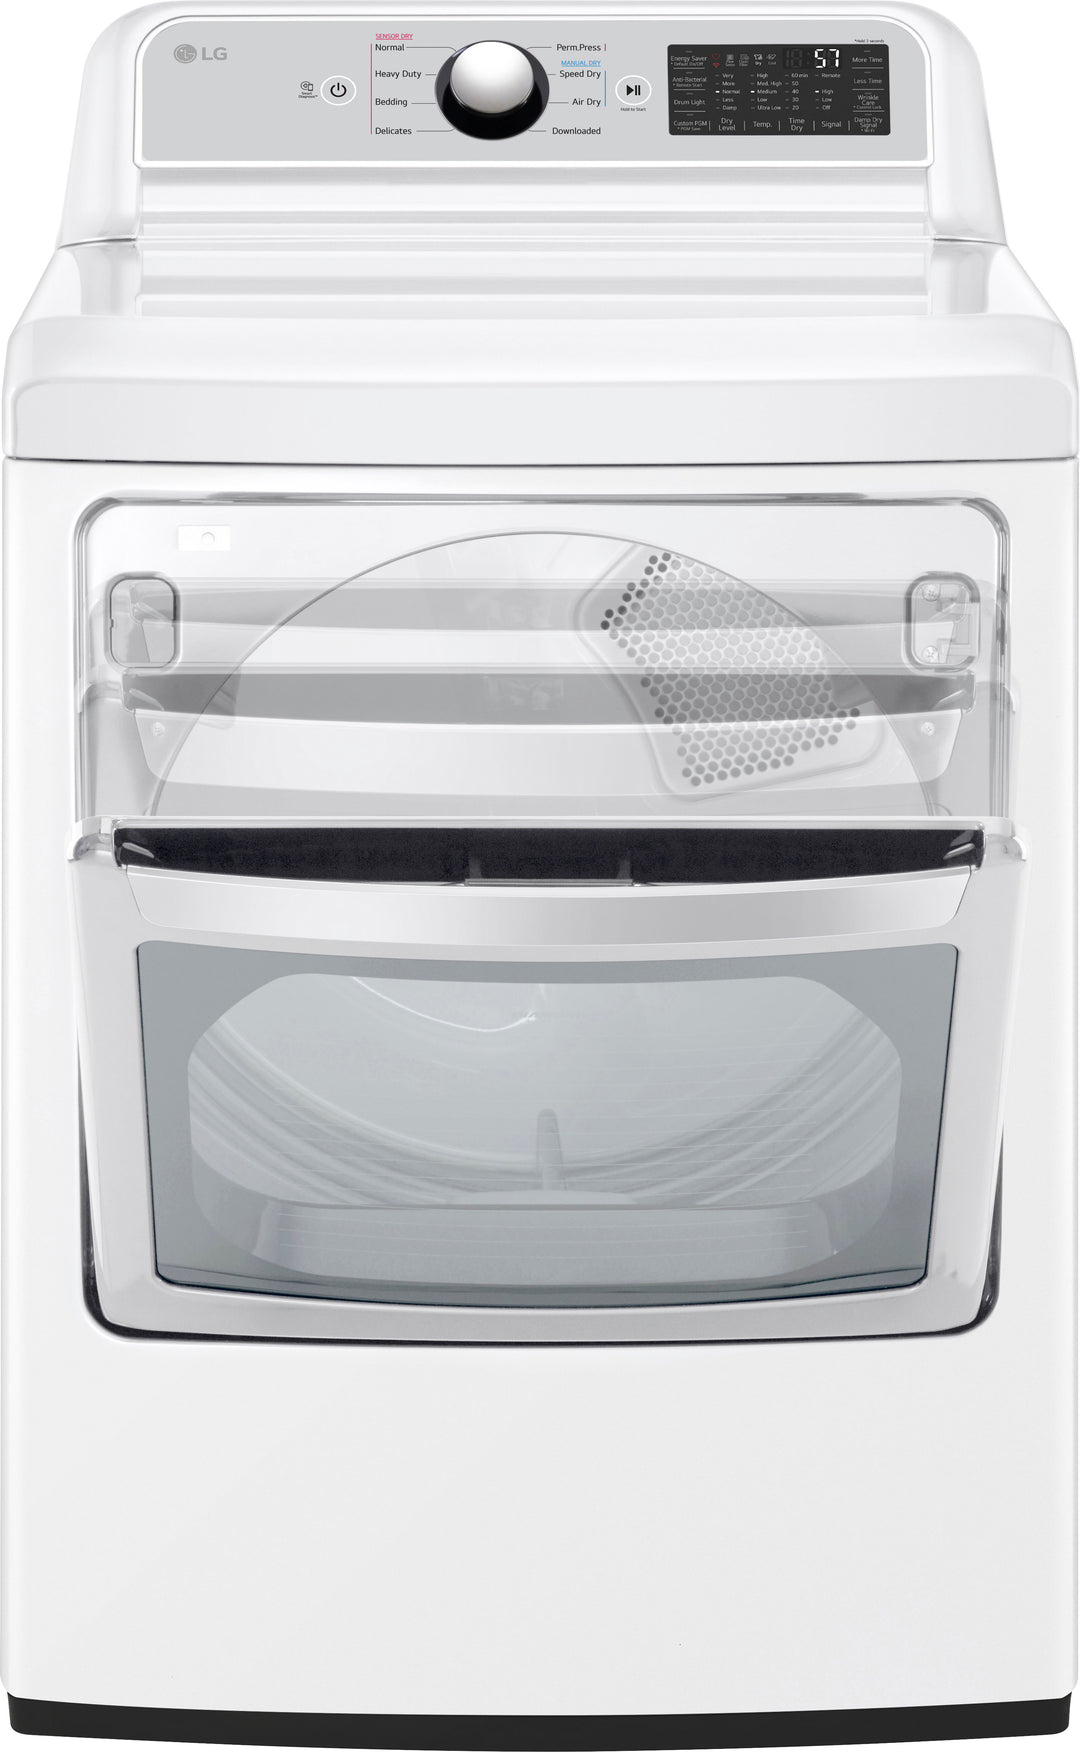 LG - 7.3 Cu. Ft. Smart Gas Dryer with EasyLoad Door - White_2